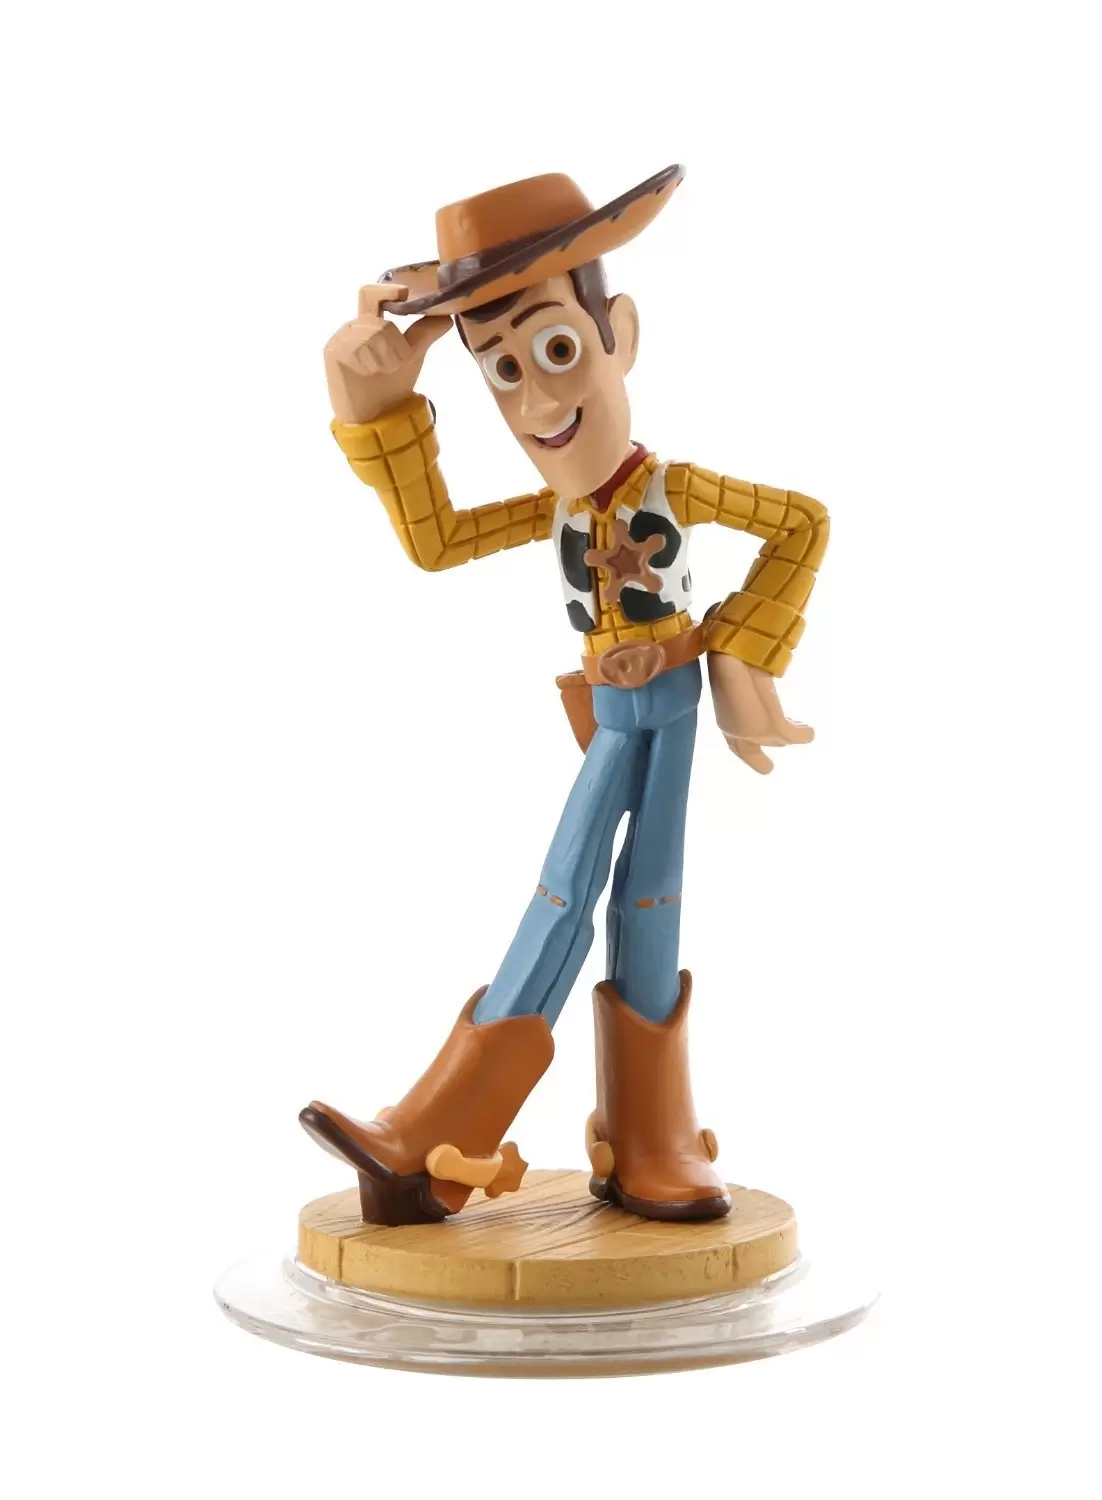 Disney Infinity Action figures - Woody